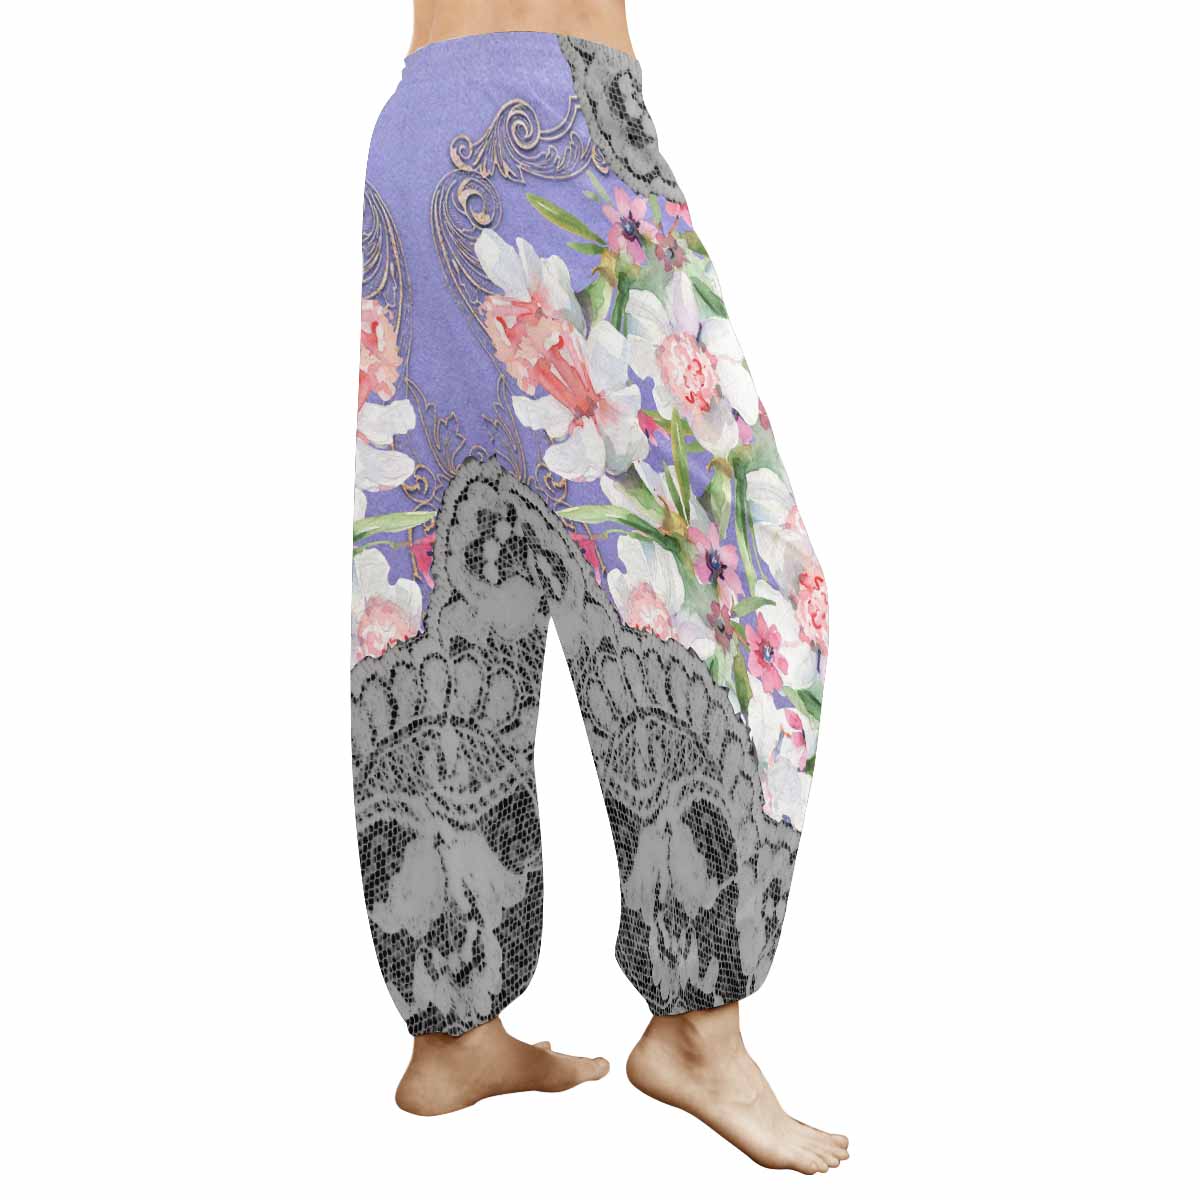 Victorian lace print Haram pants, loose comfy pants design 45